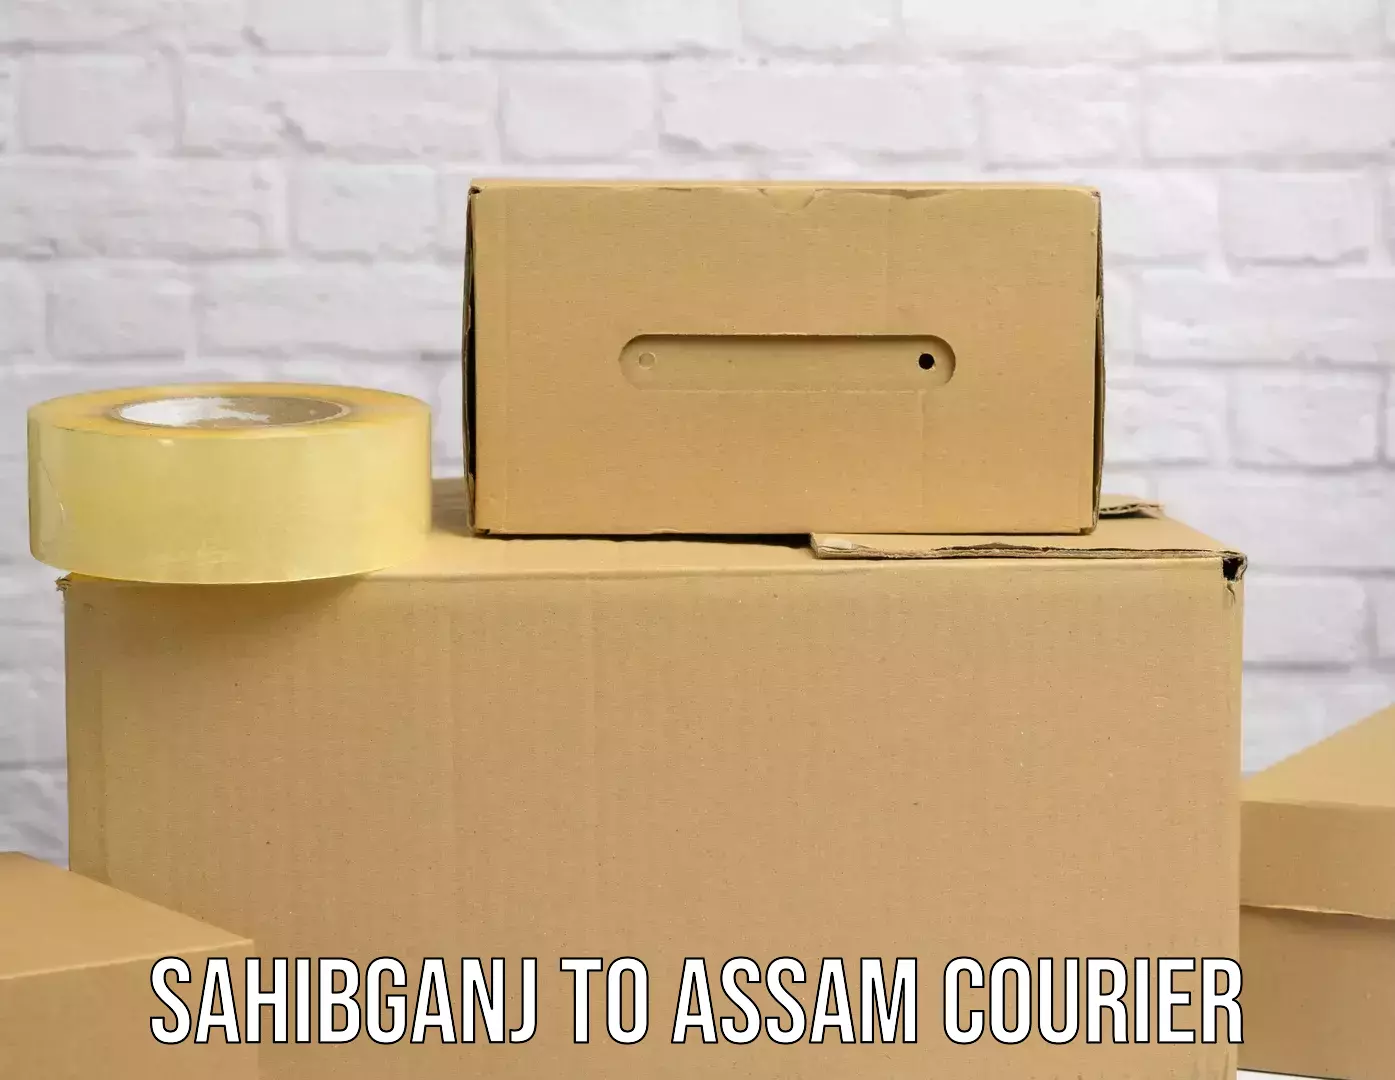 Courier service comparison Sahibganj to Bongaigaon